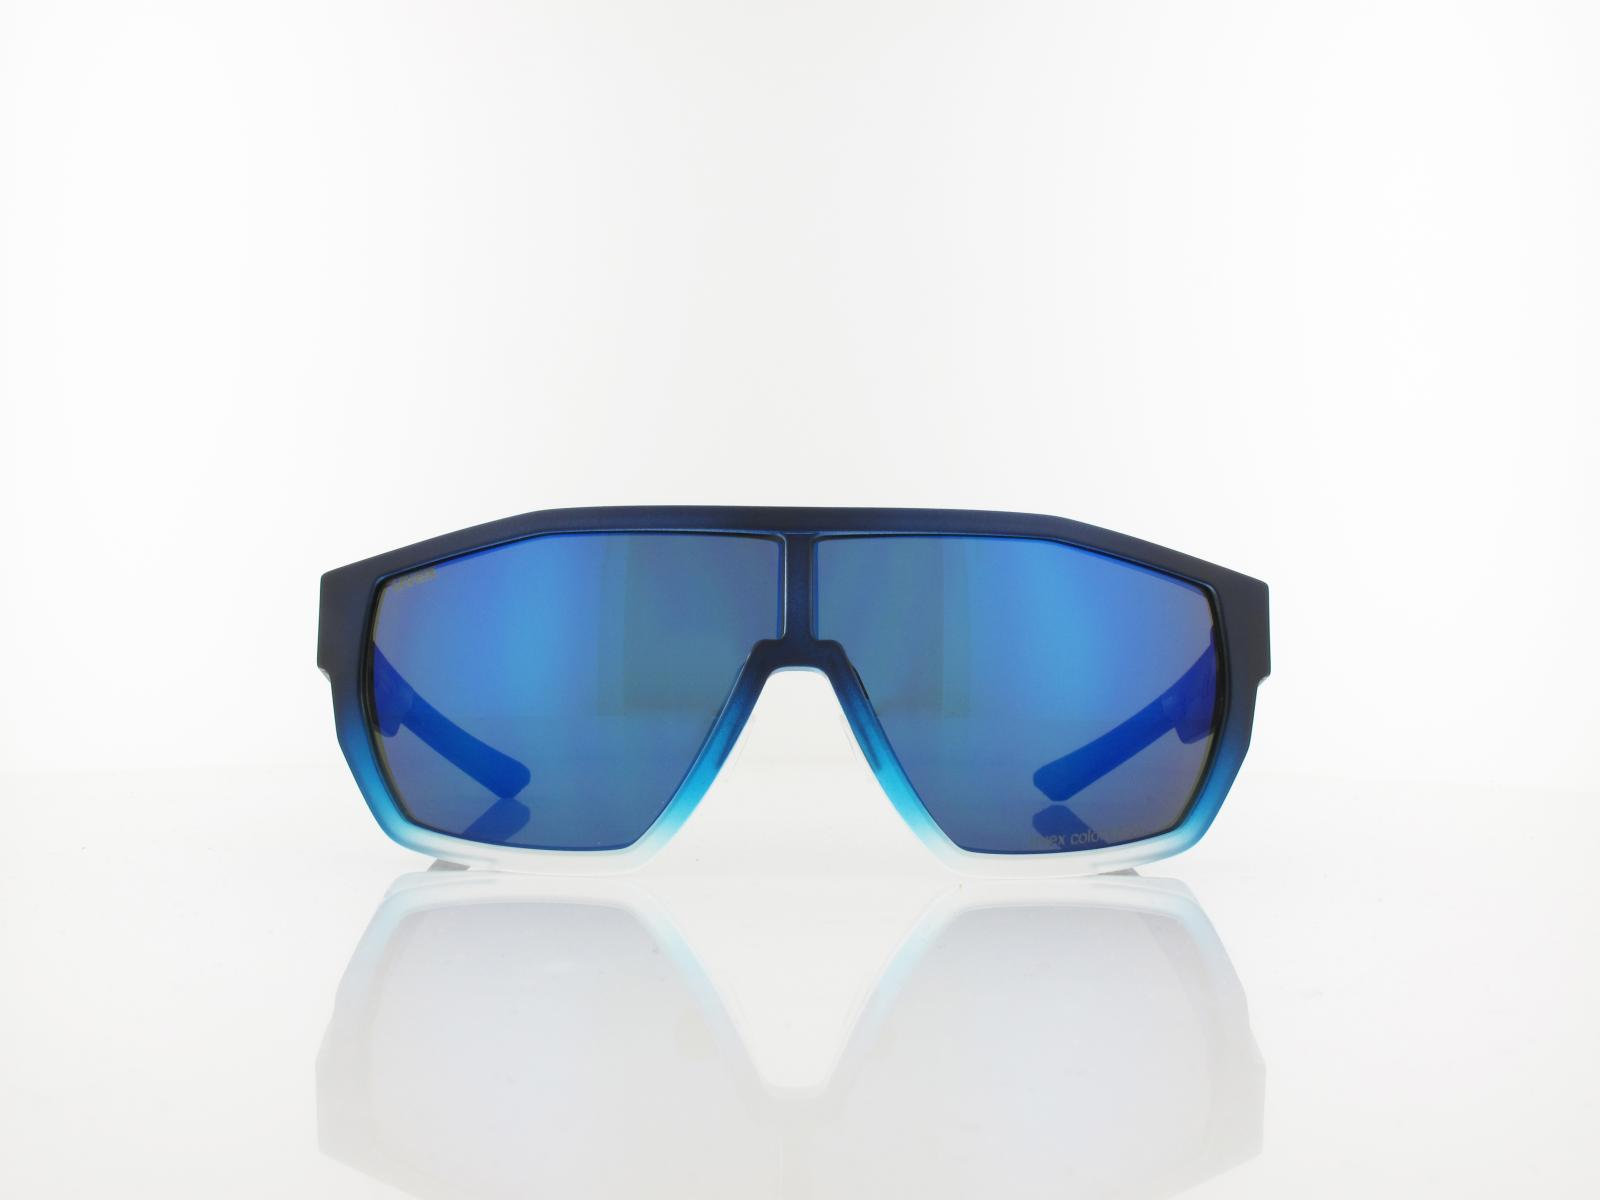 UVEX | mtn style CV S533036 4480 66 | blue matt fade / colorvision mirror blue